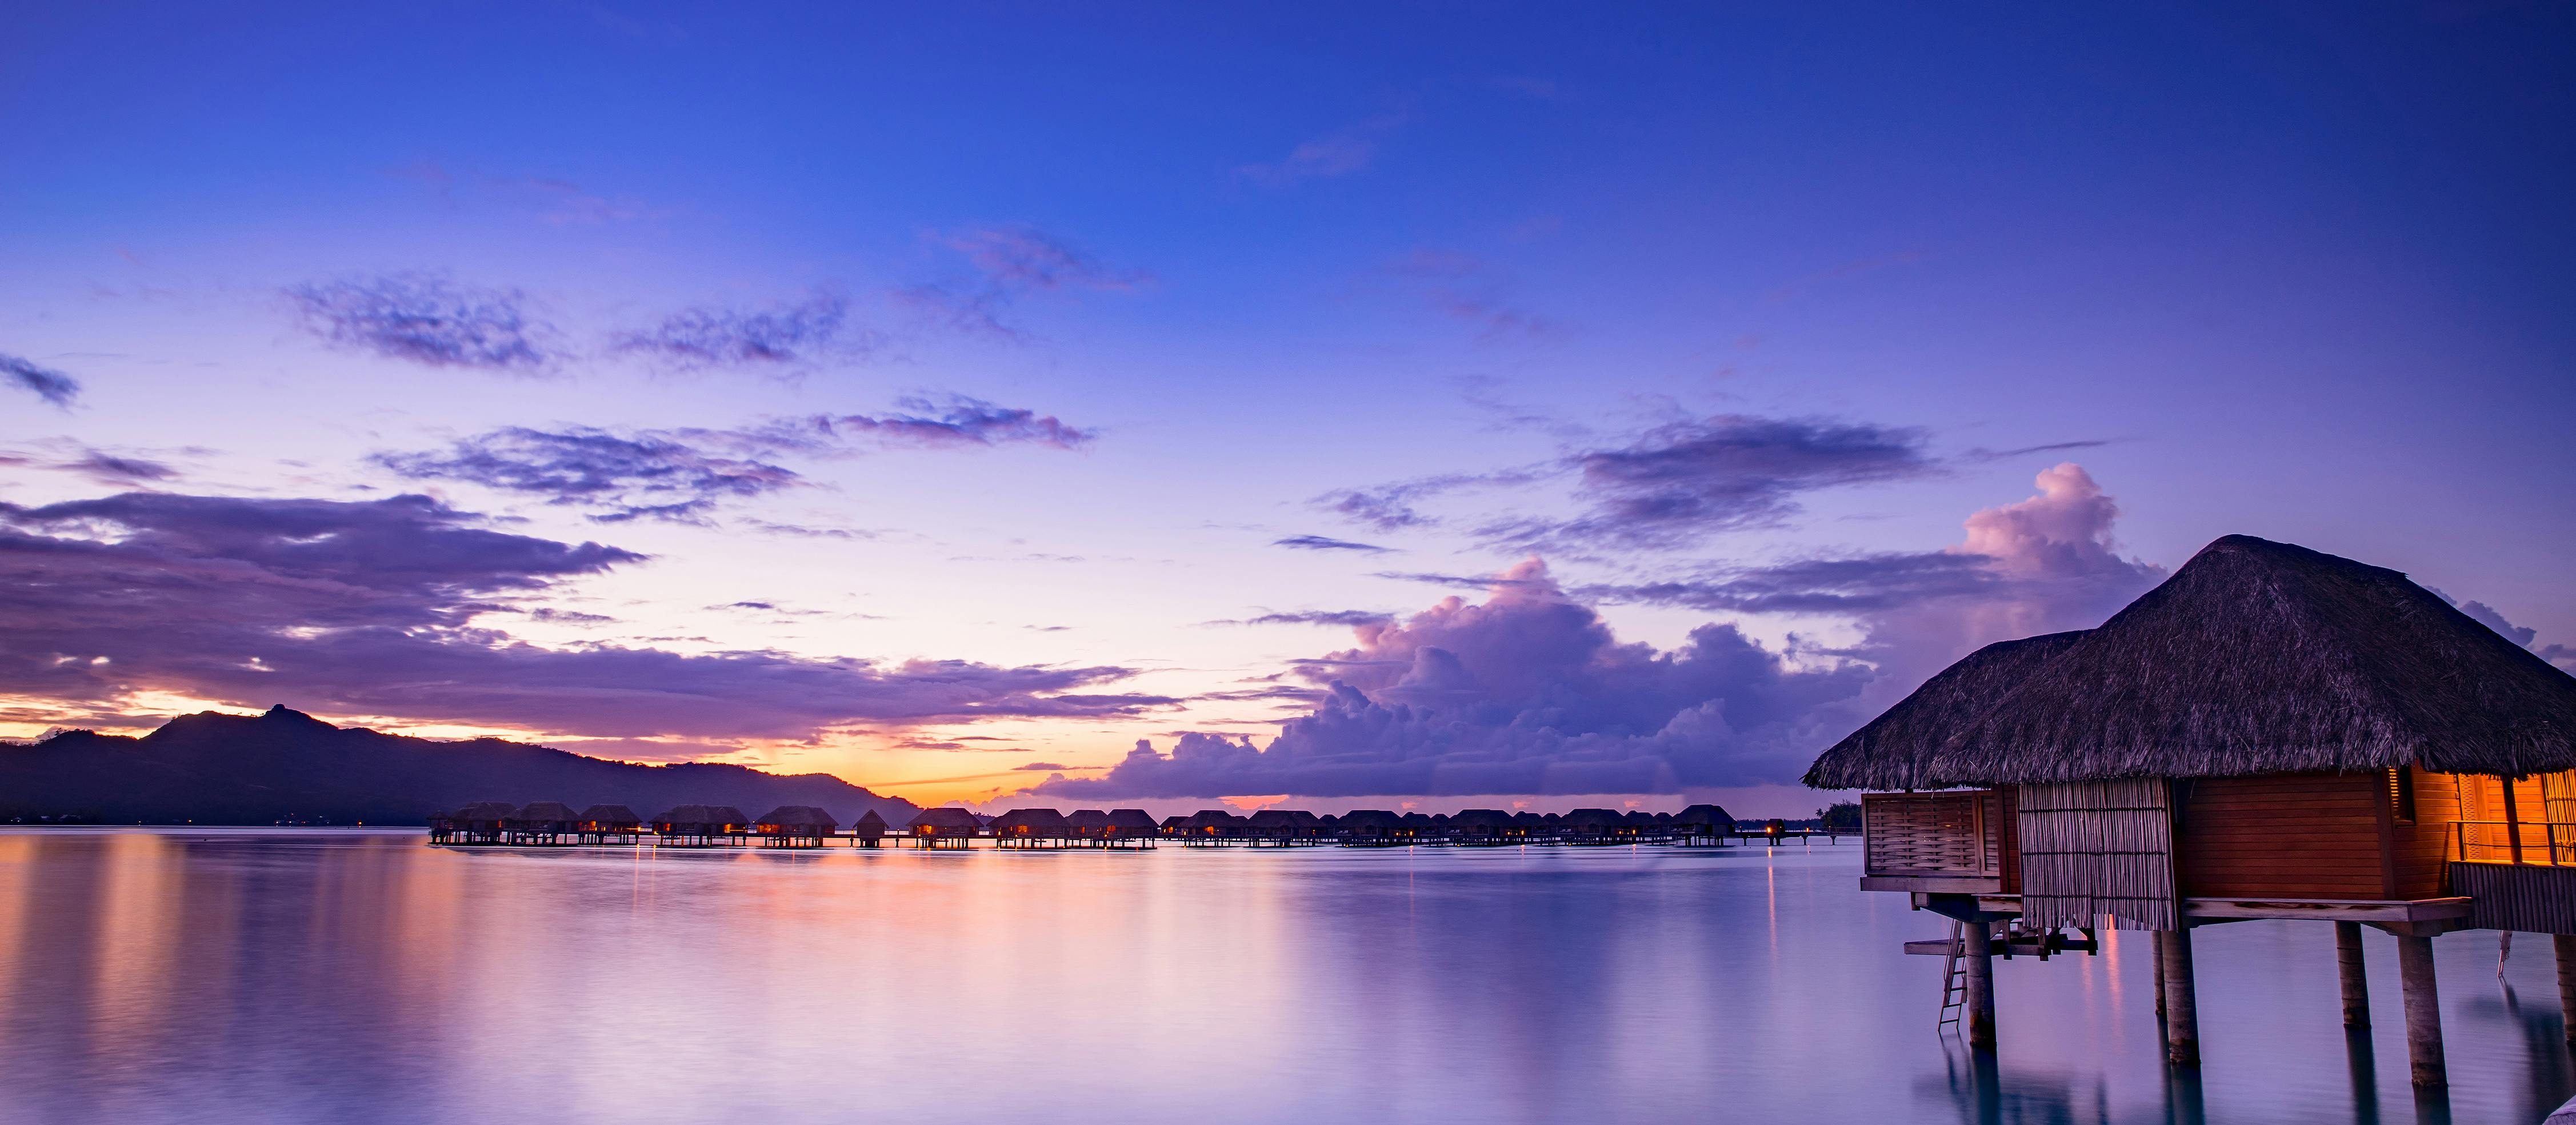 Private cruise at sunset in Bora Bora Musement